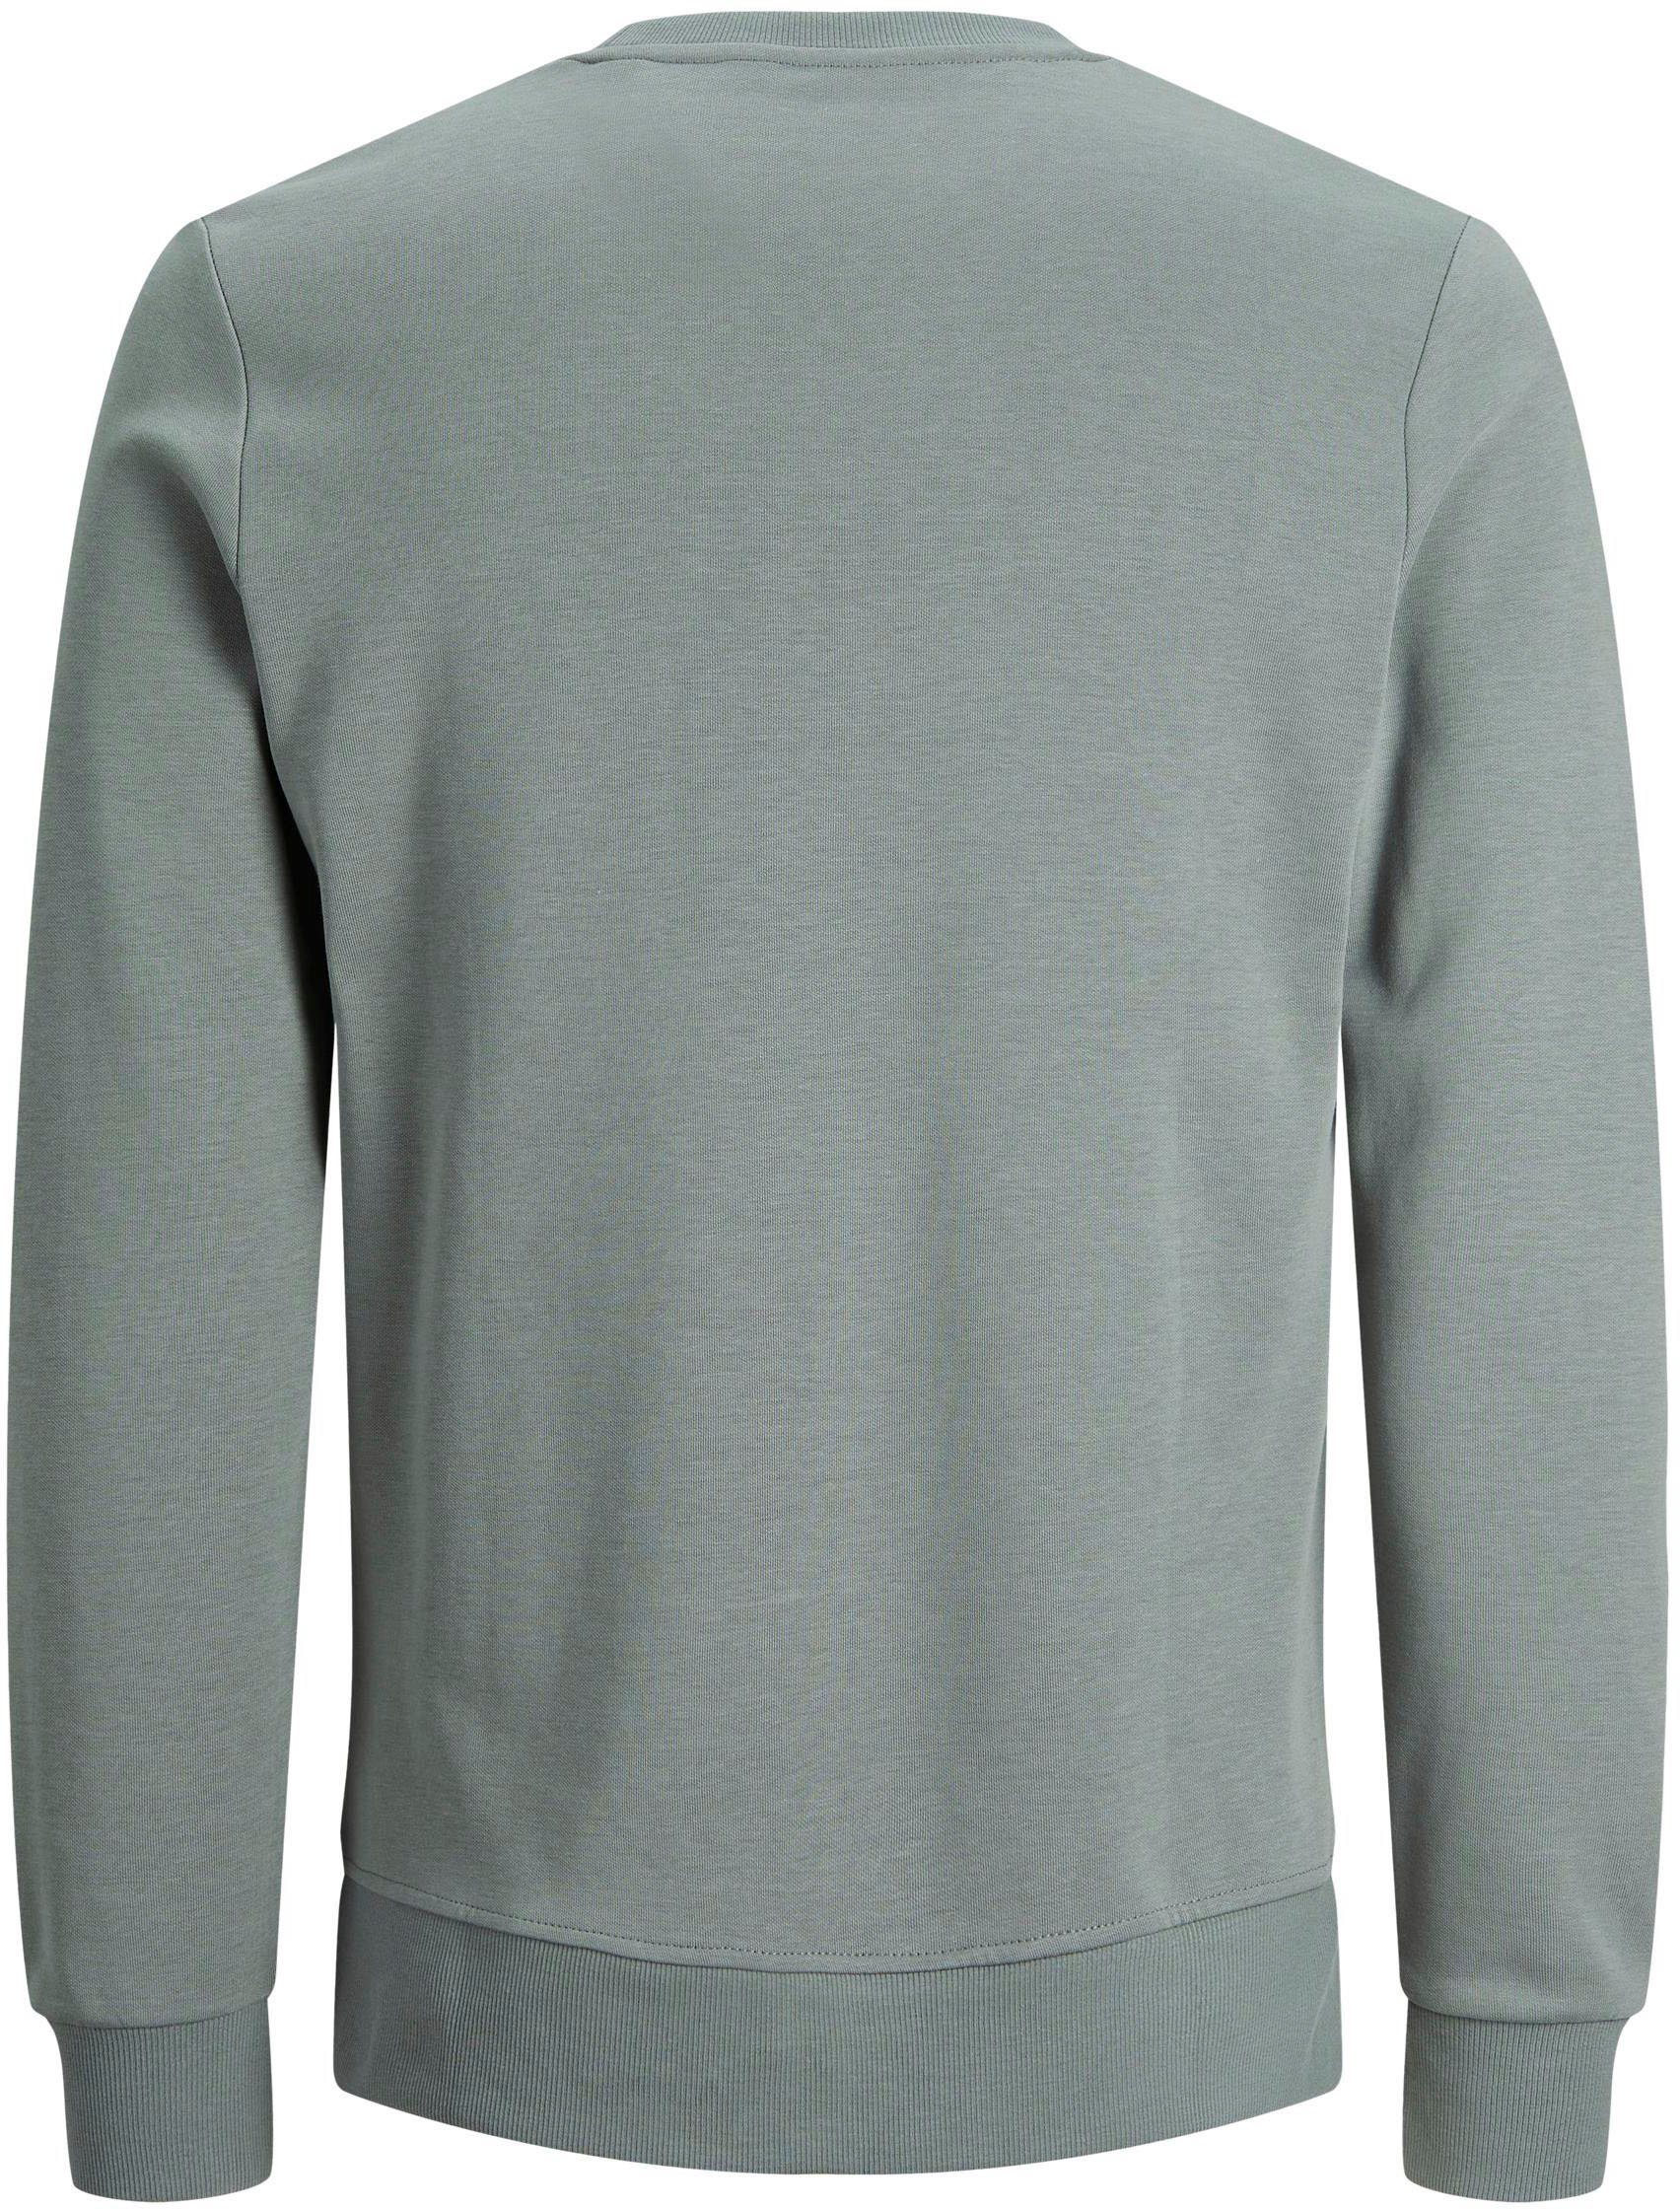 Sweatshirt Jack Jones & BASIC graugrün SWEAT